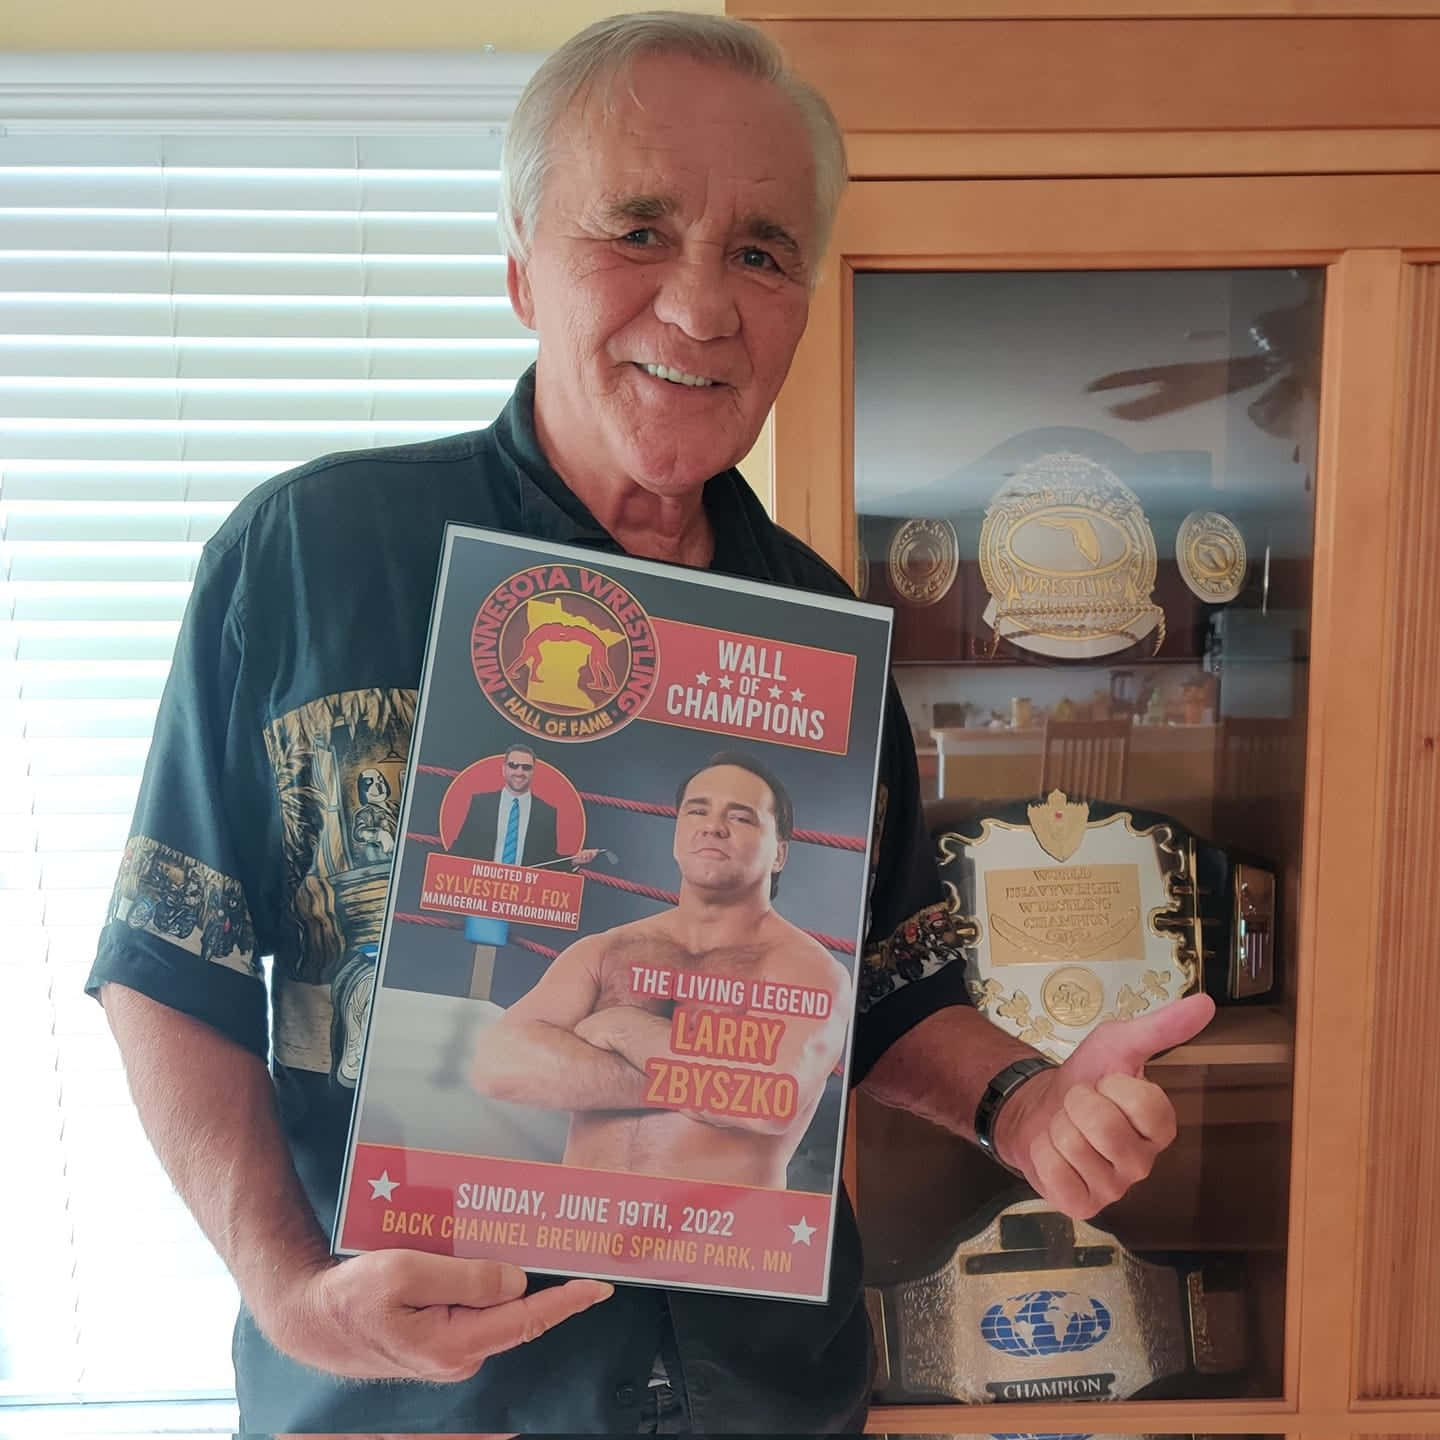 Amerikanischerehemaliger Wrestler Larry Zbyszko Ruhmeshalle-plakette Wallpaper